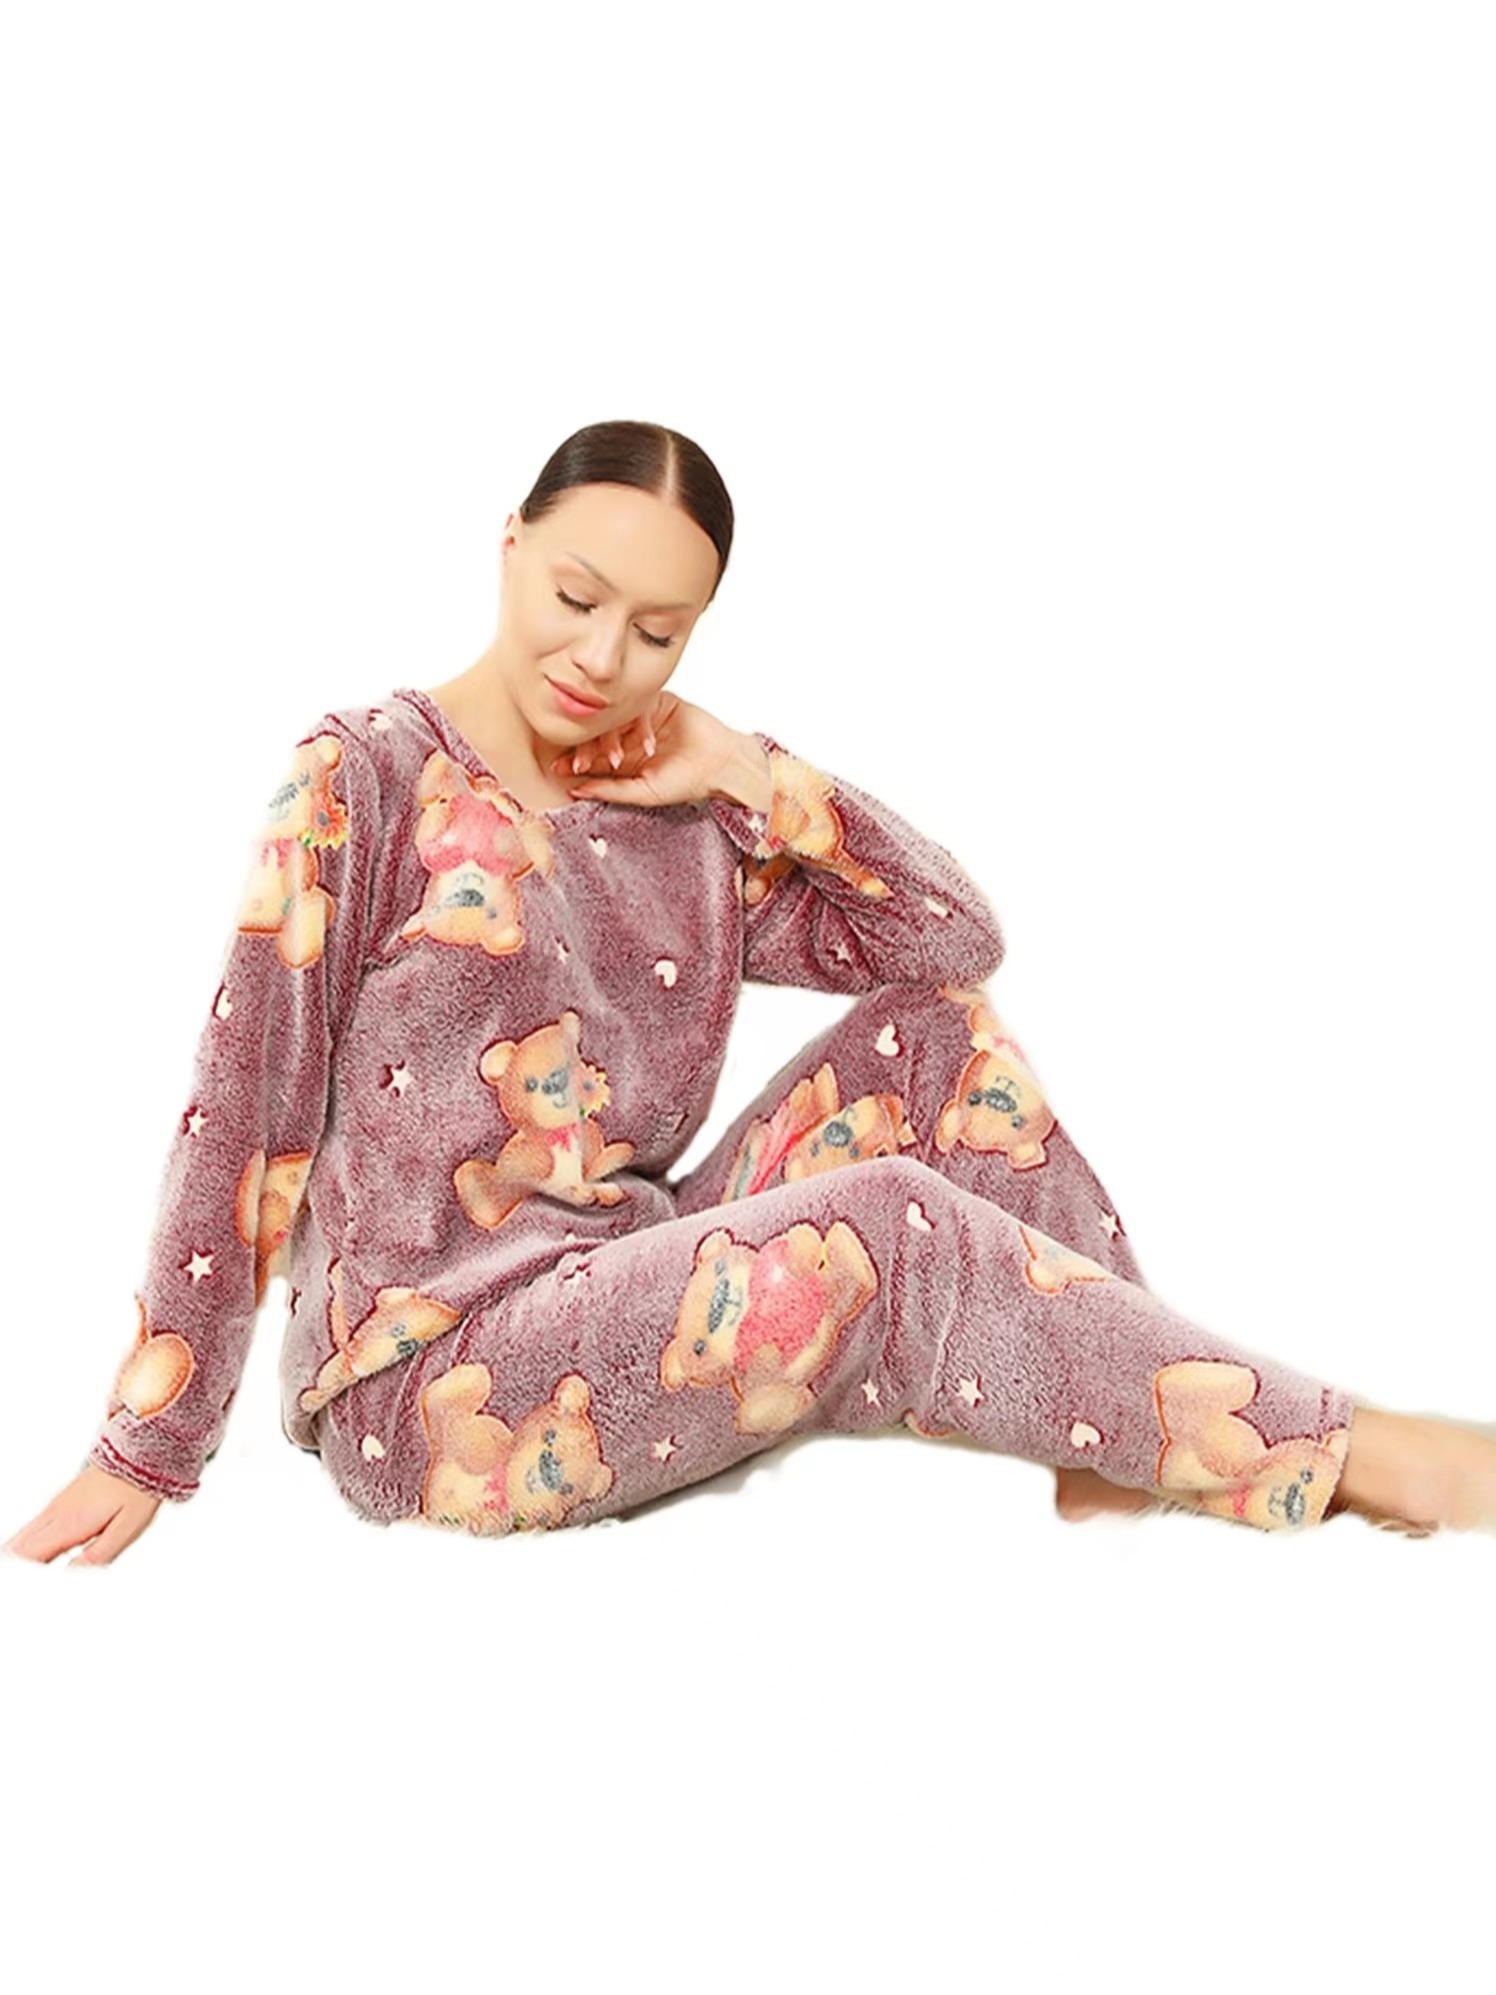 mejor pijama en conjuntos de pijamalindo.com